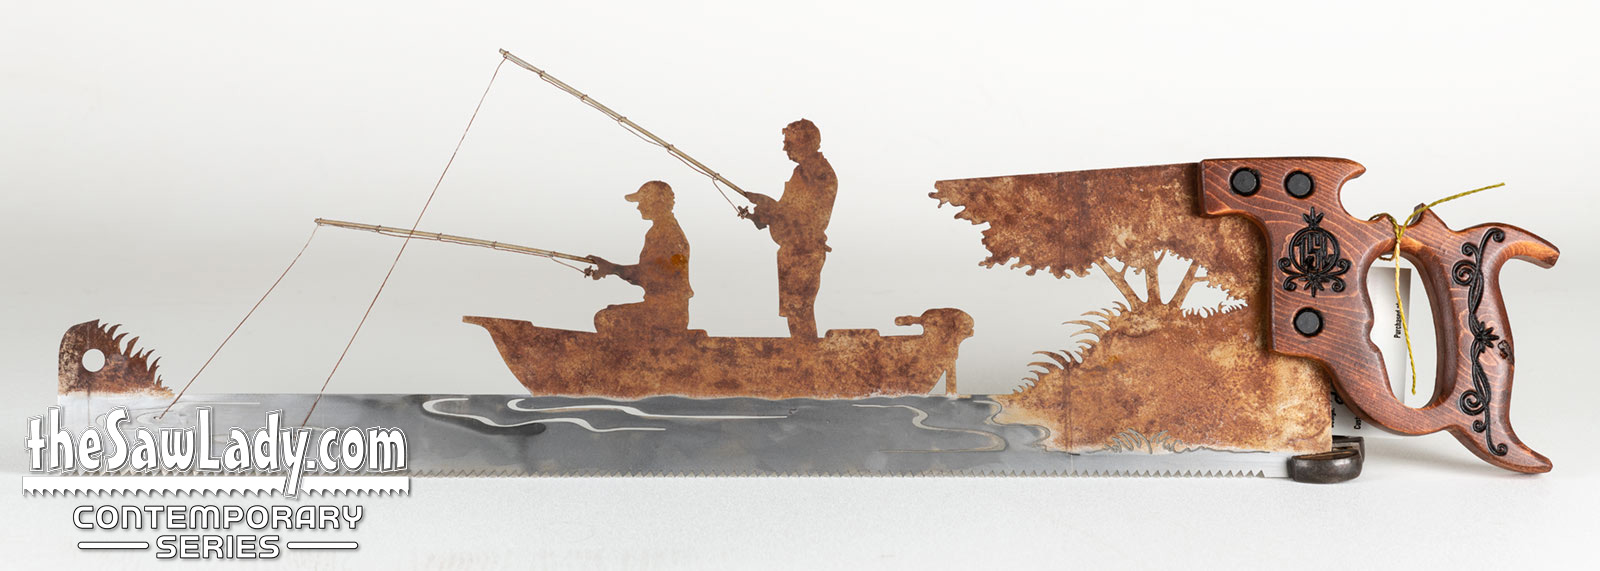 Fishing-Boat-2-men_metal saw wall art